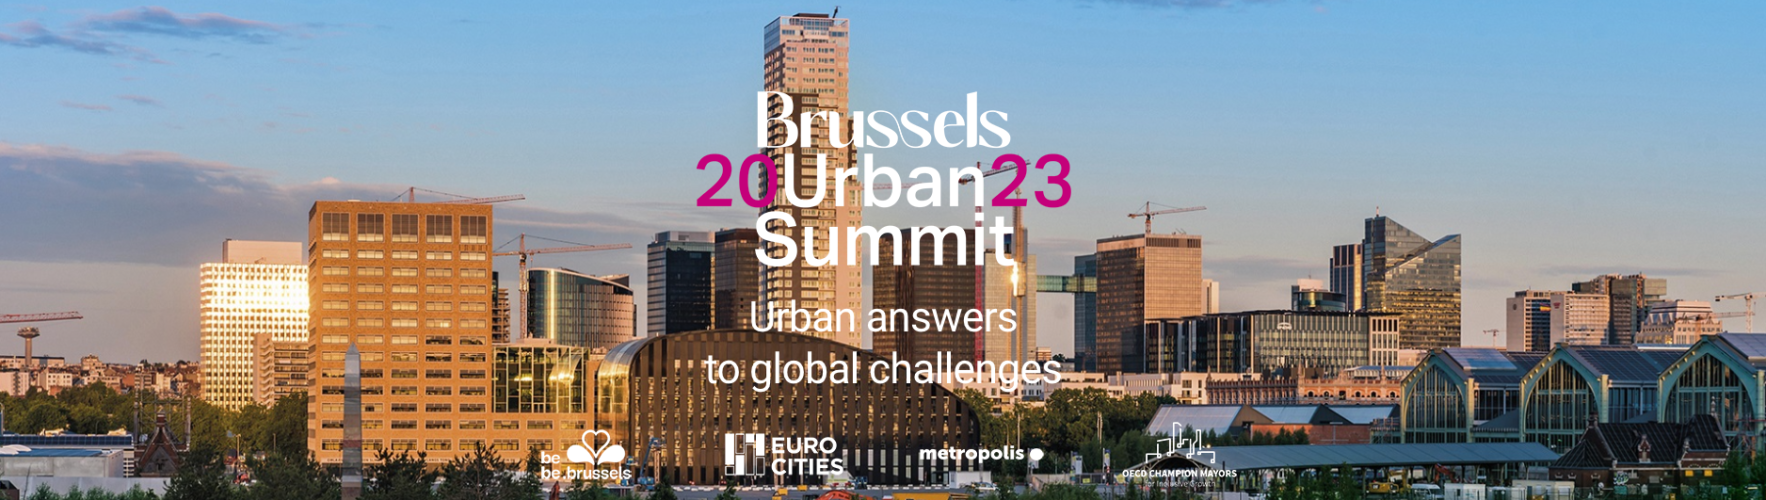 Brussels Urban Summit 